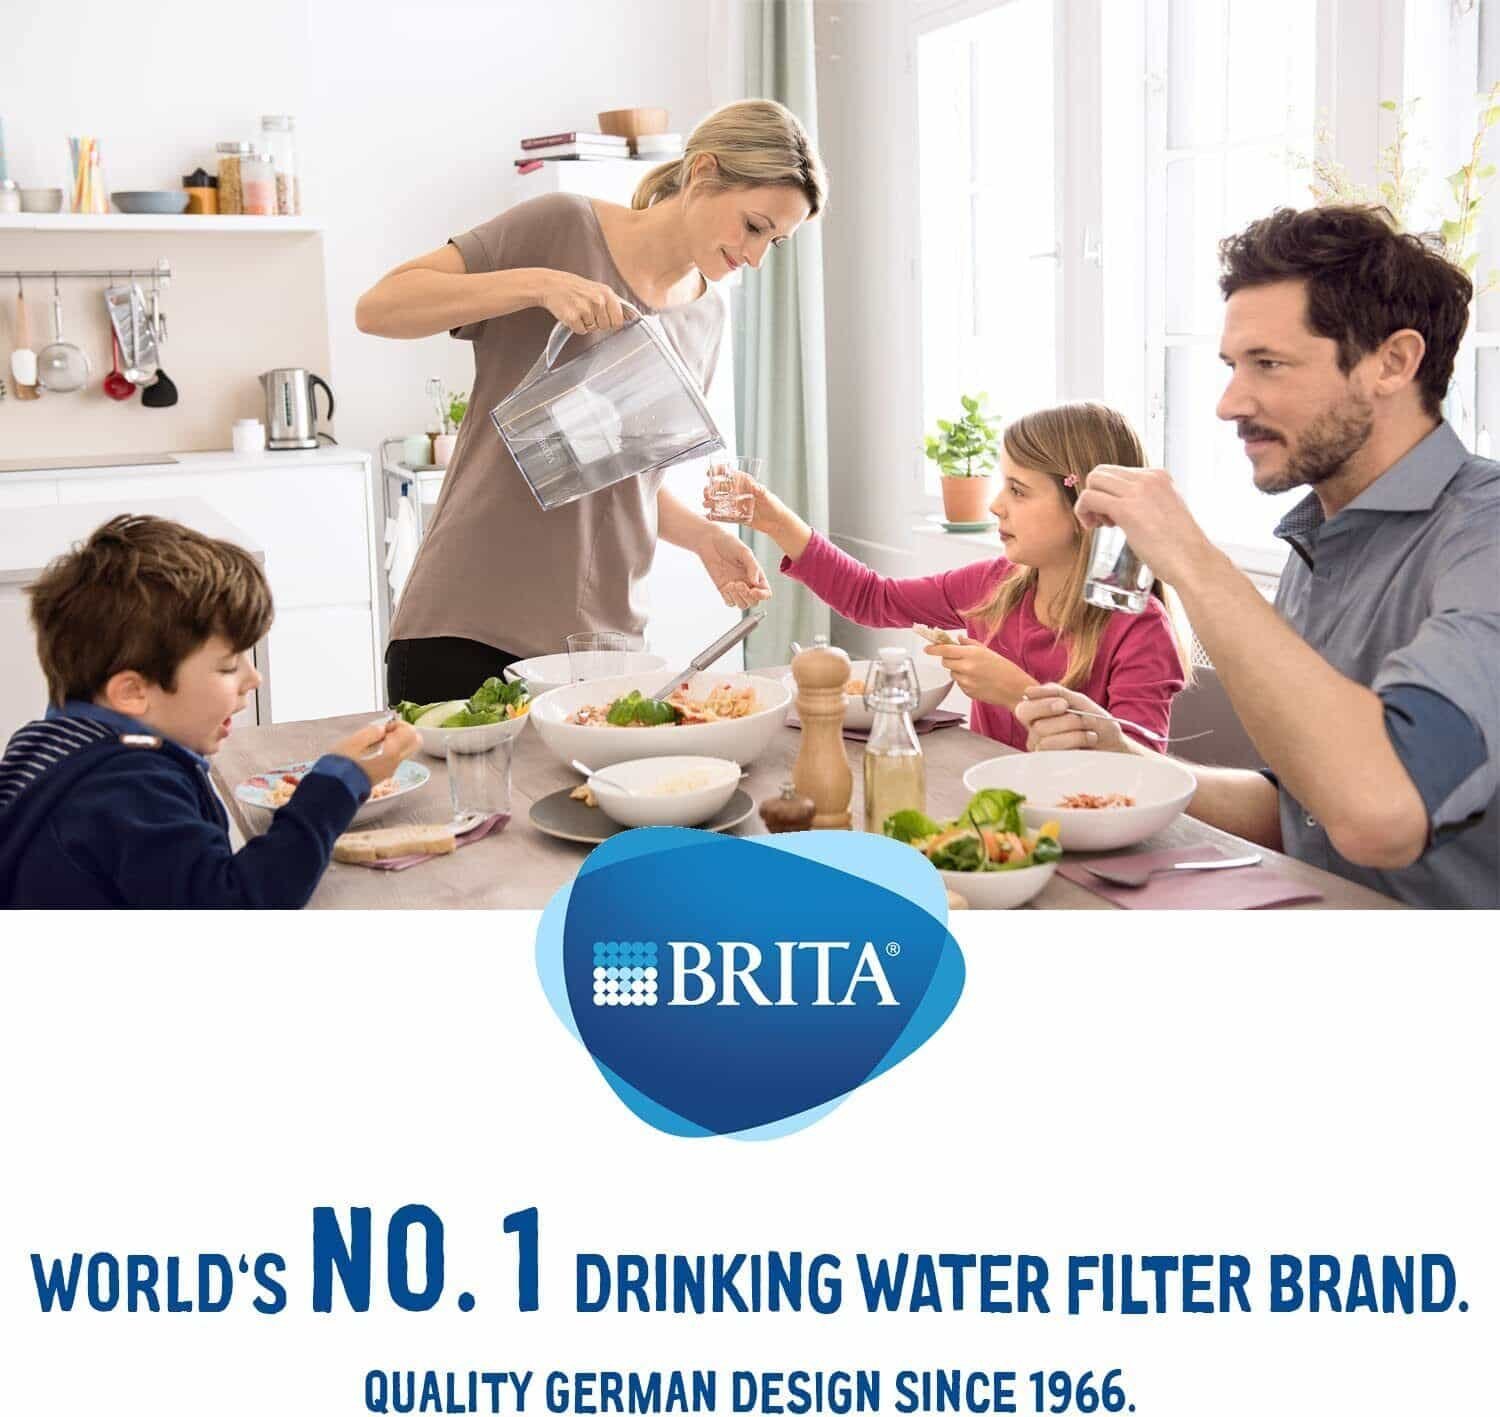 brita p1000 water filter – Compra brita p1000 water filter con